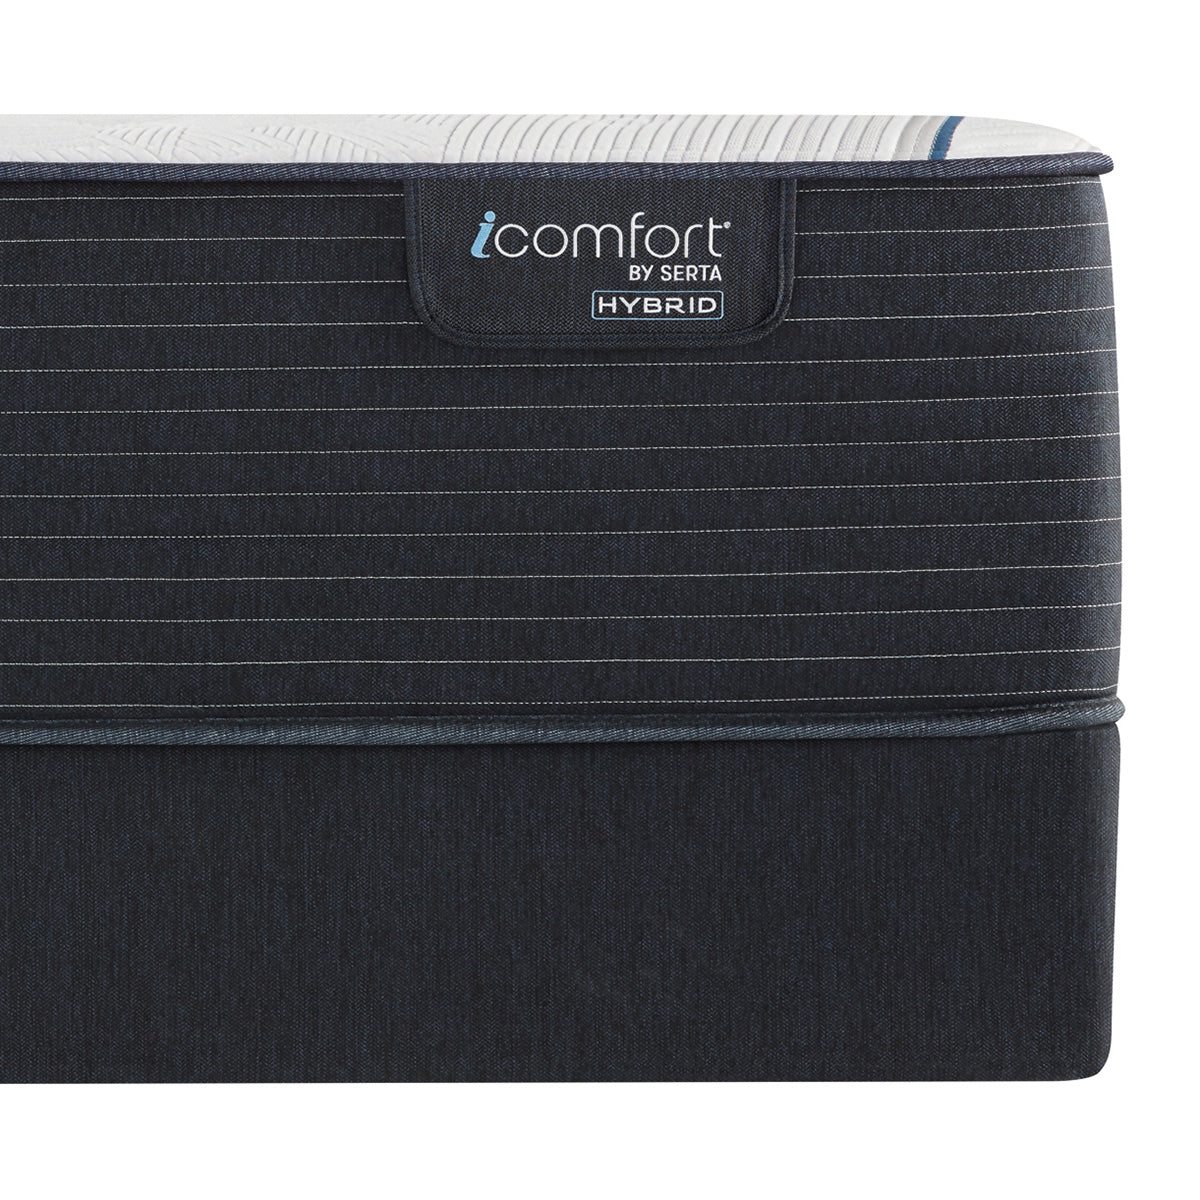 Serta iComfort Blue Foundation mattress on top